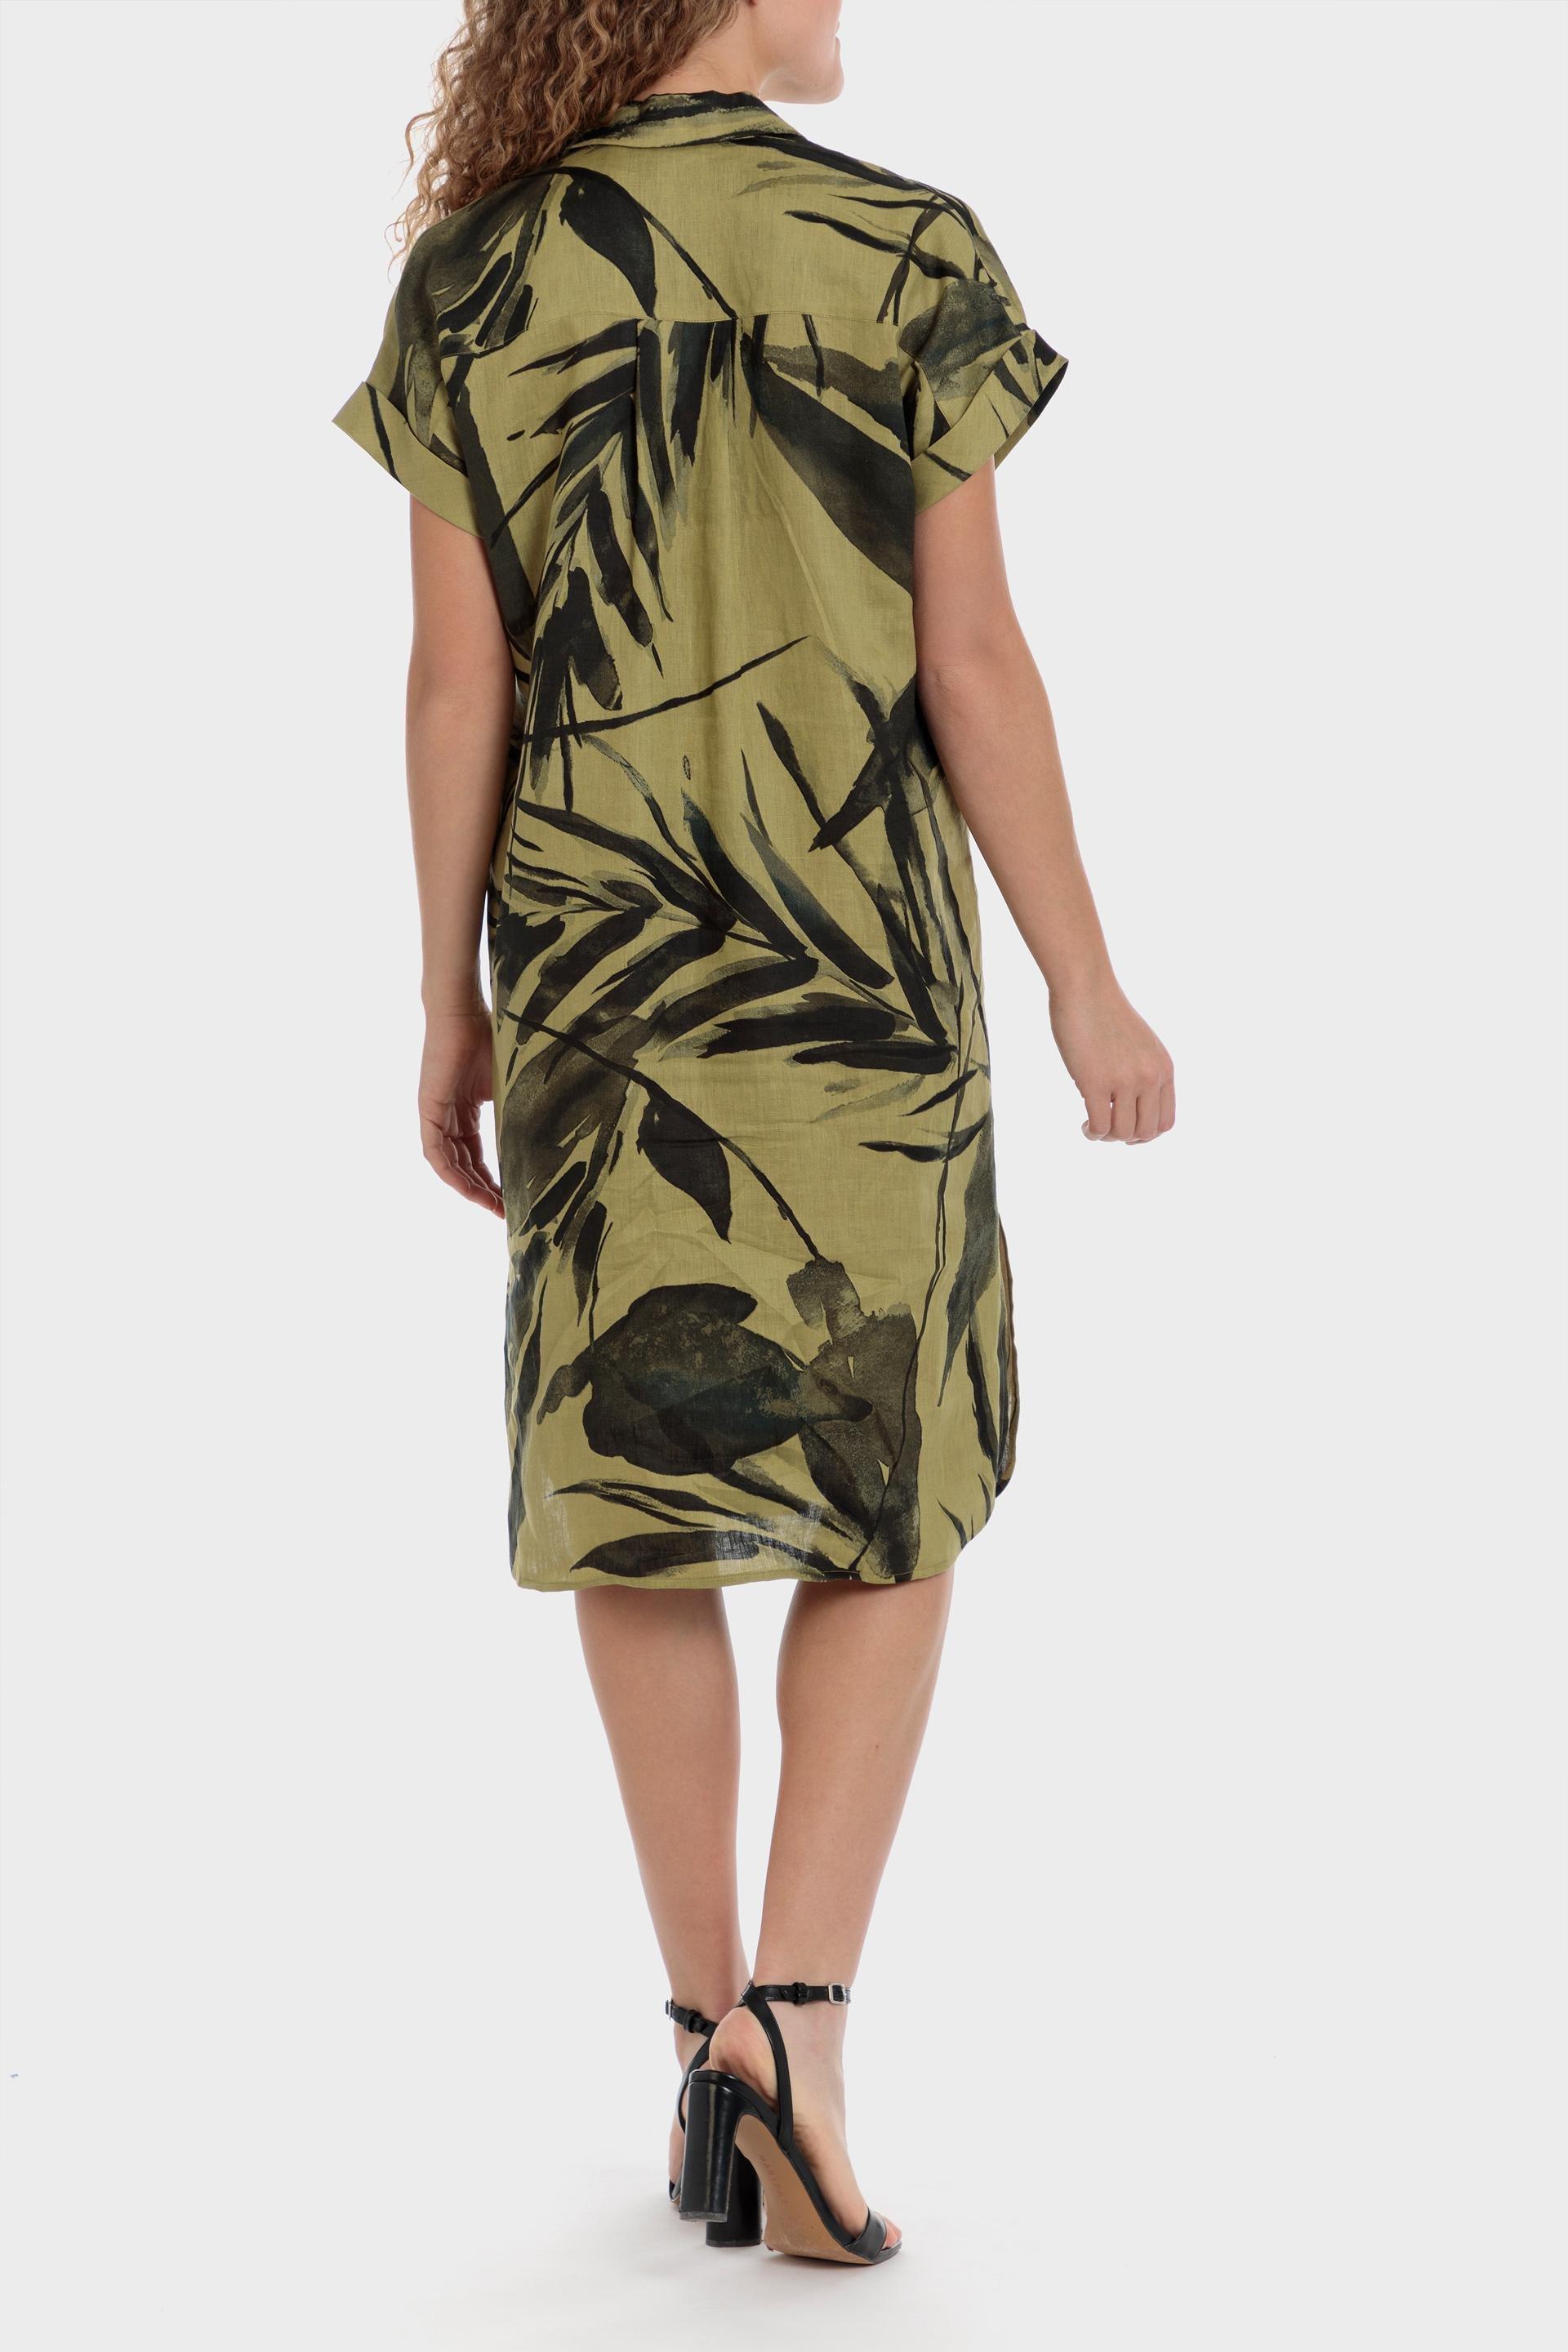 Punt Roma - Green Printed Linen Dress